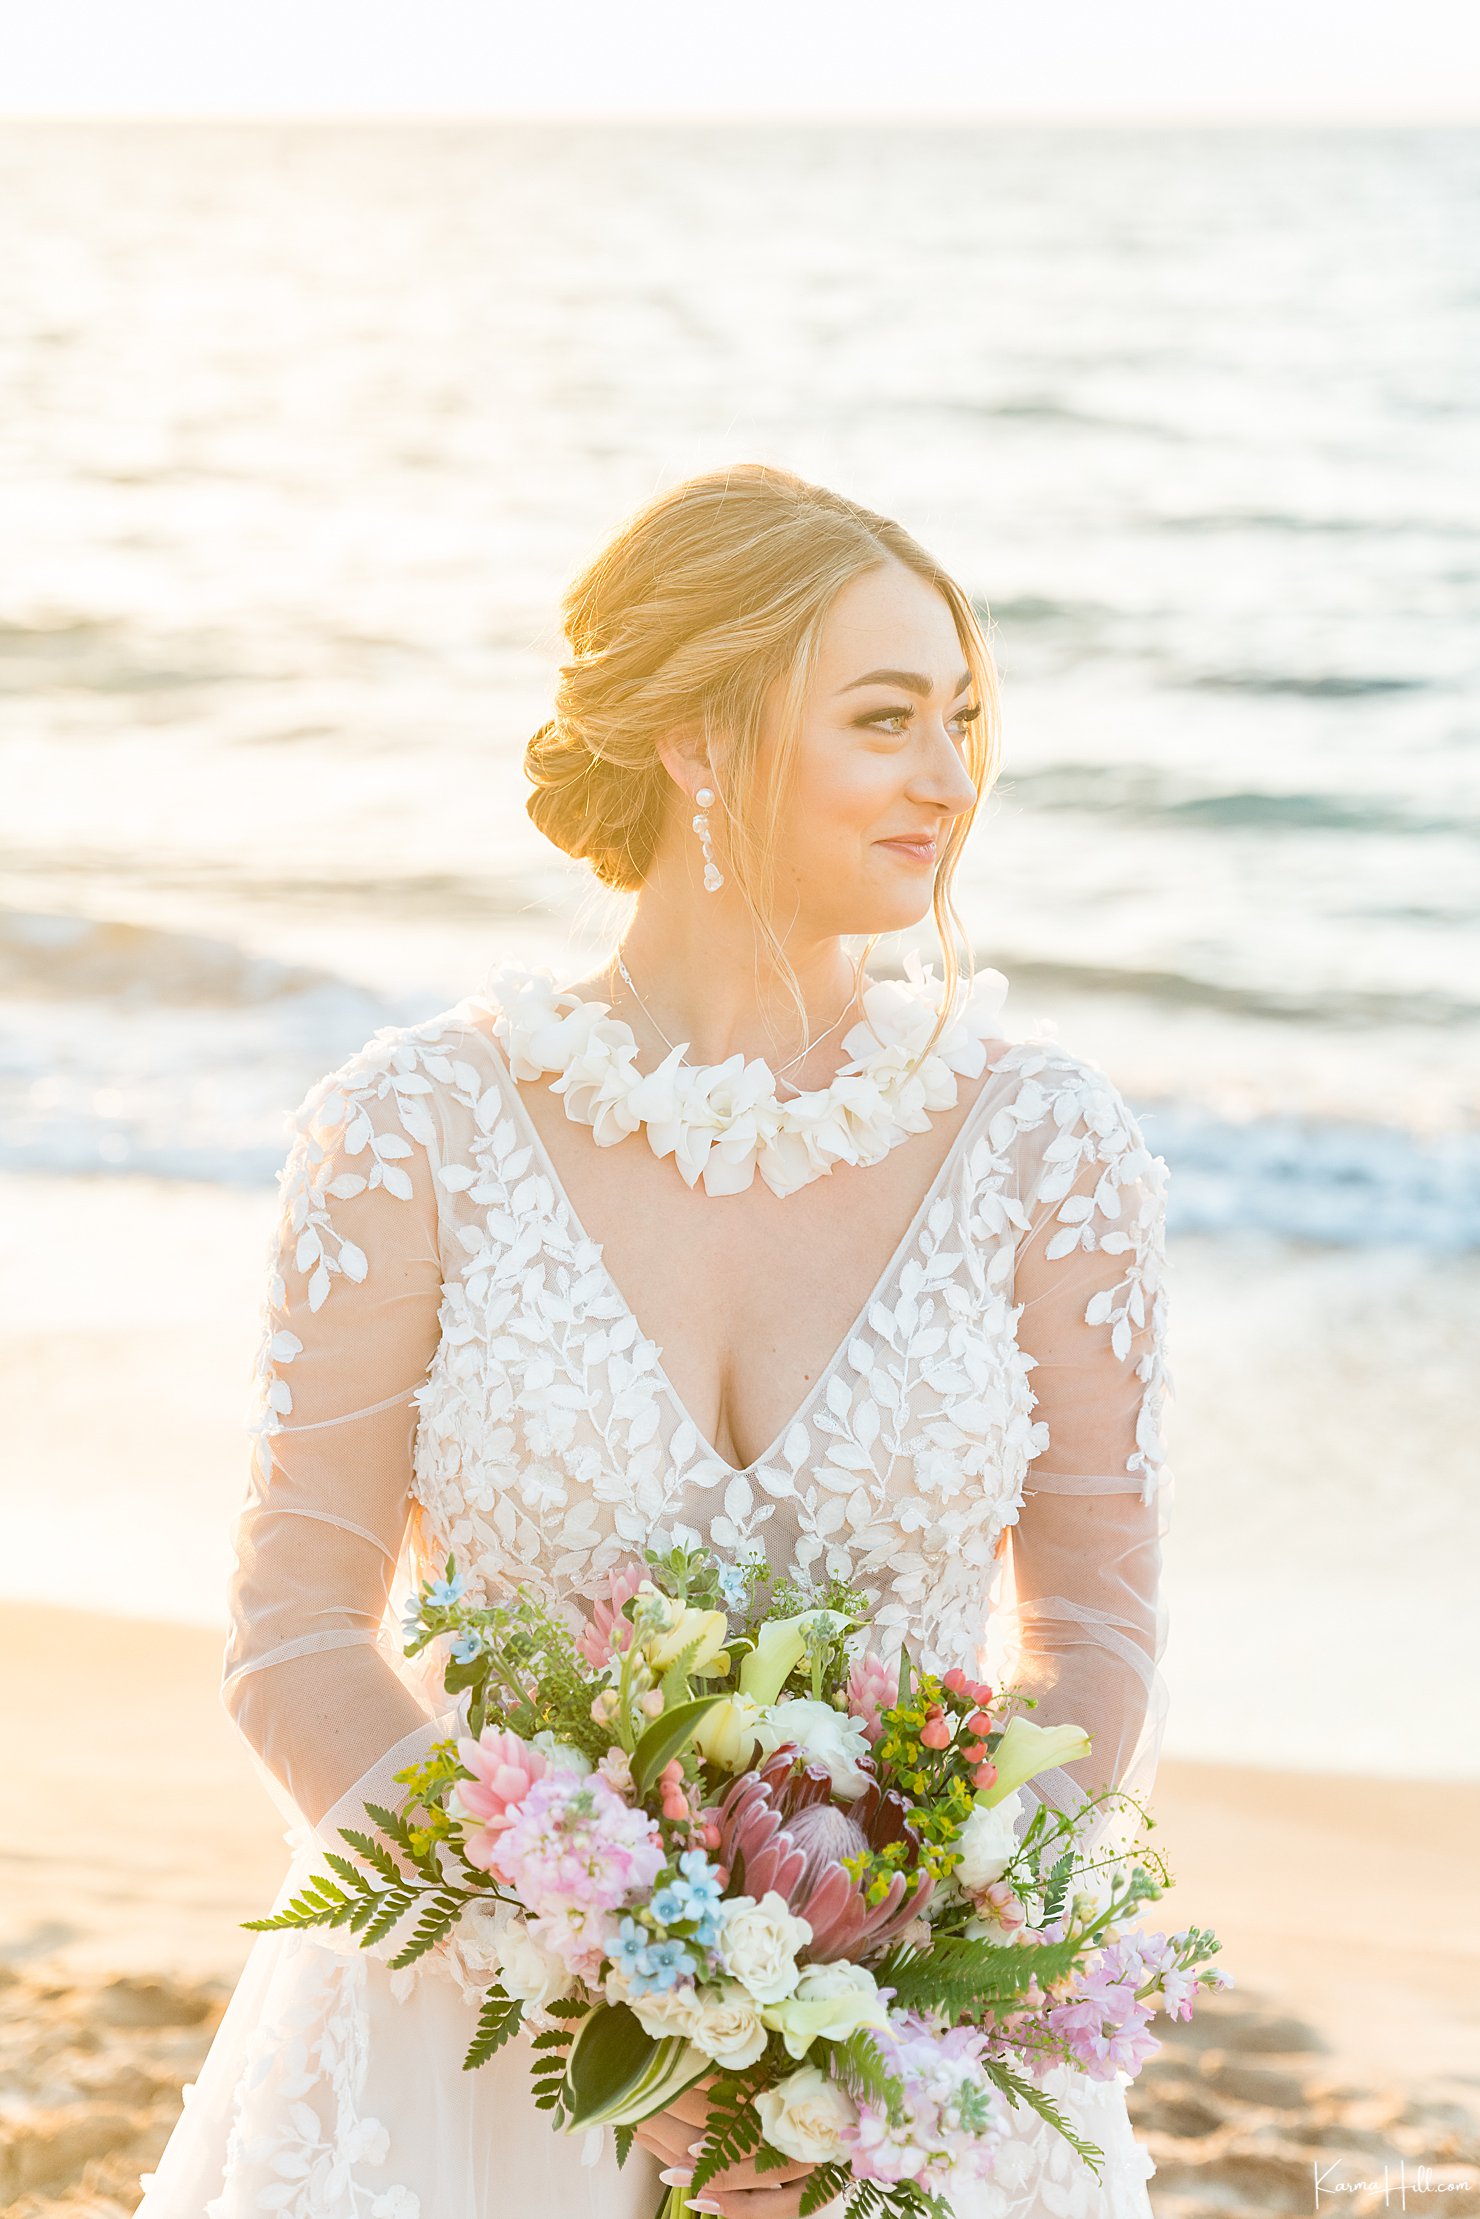 Top Bridal Hair Tips by Maui's #1 Stylist